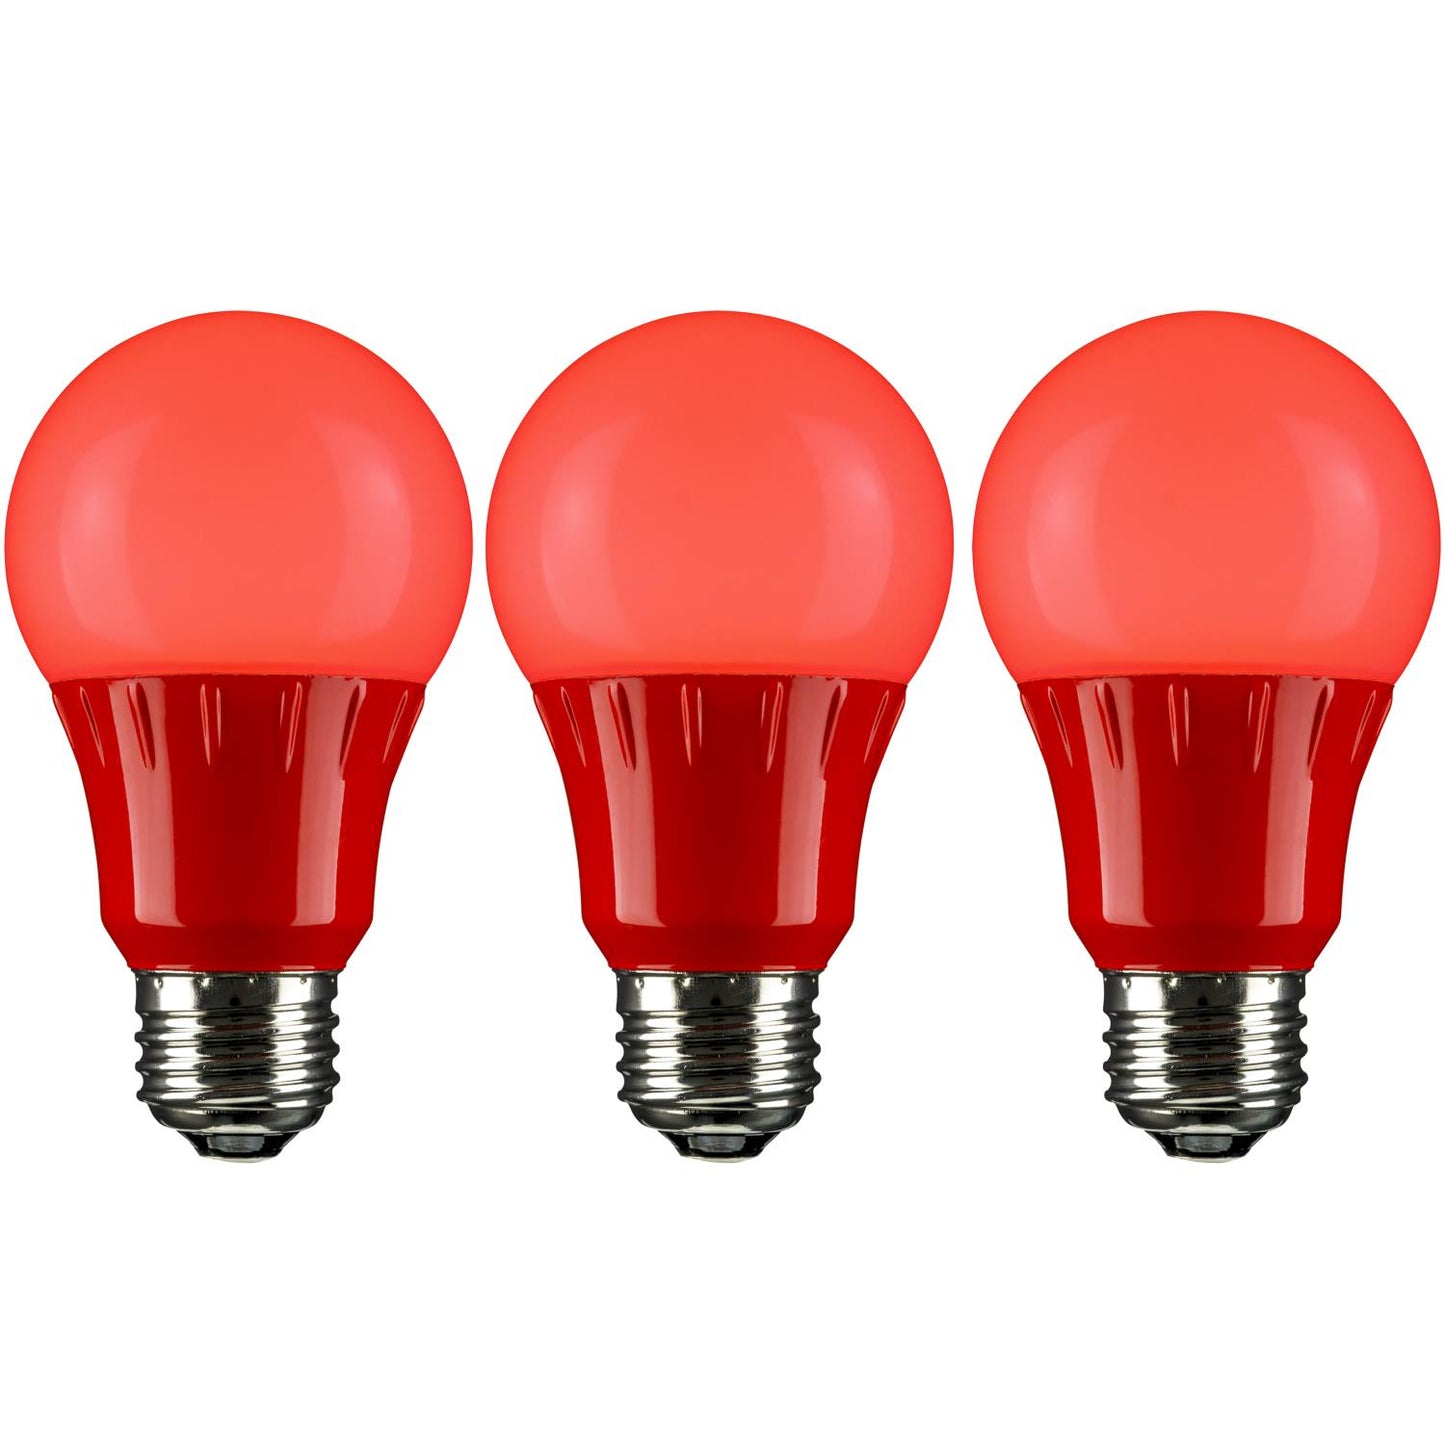 Sunlite LED A Type Colored 3W Light Bulb Medium (E26) Base, Red